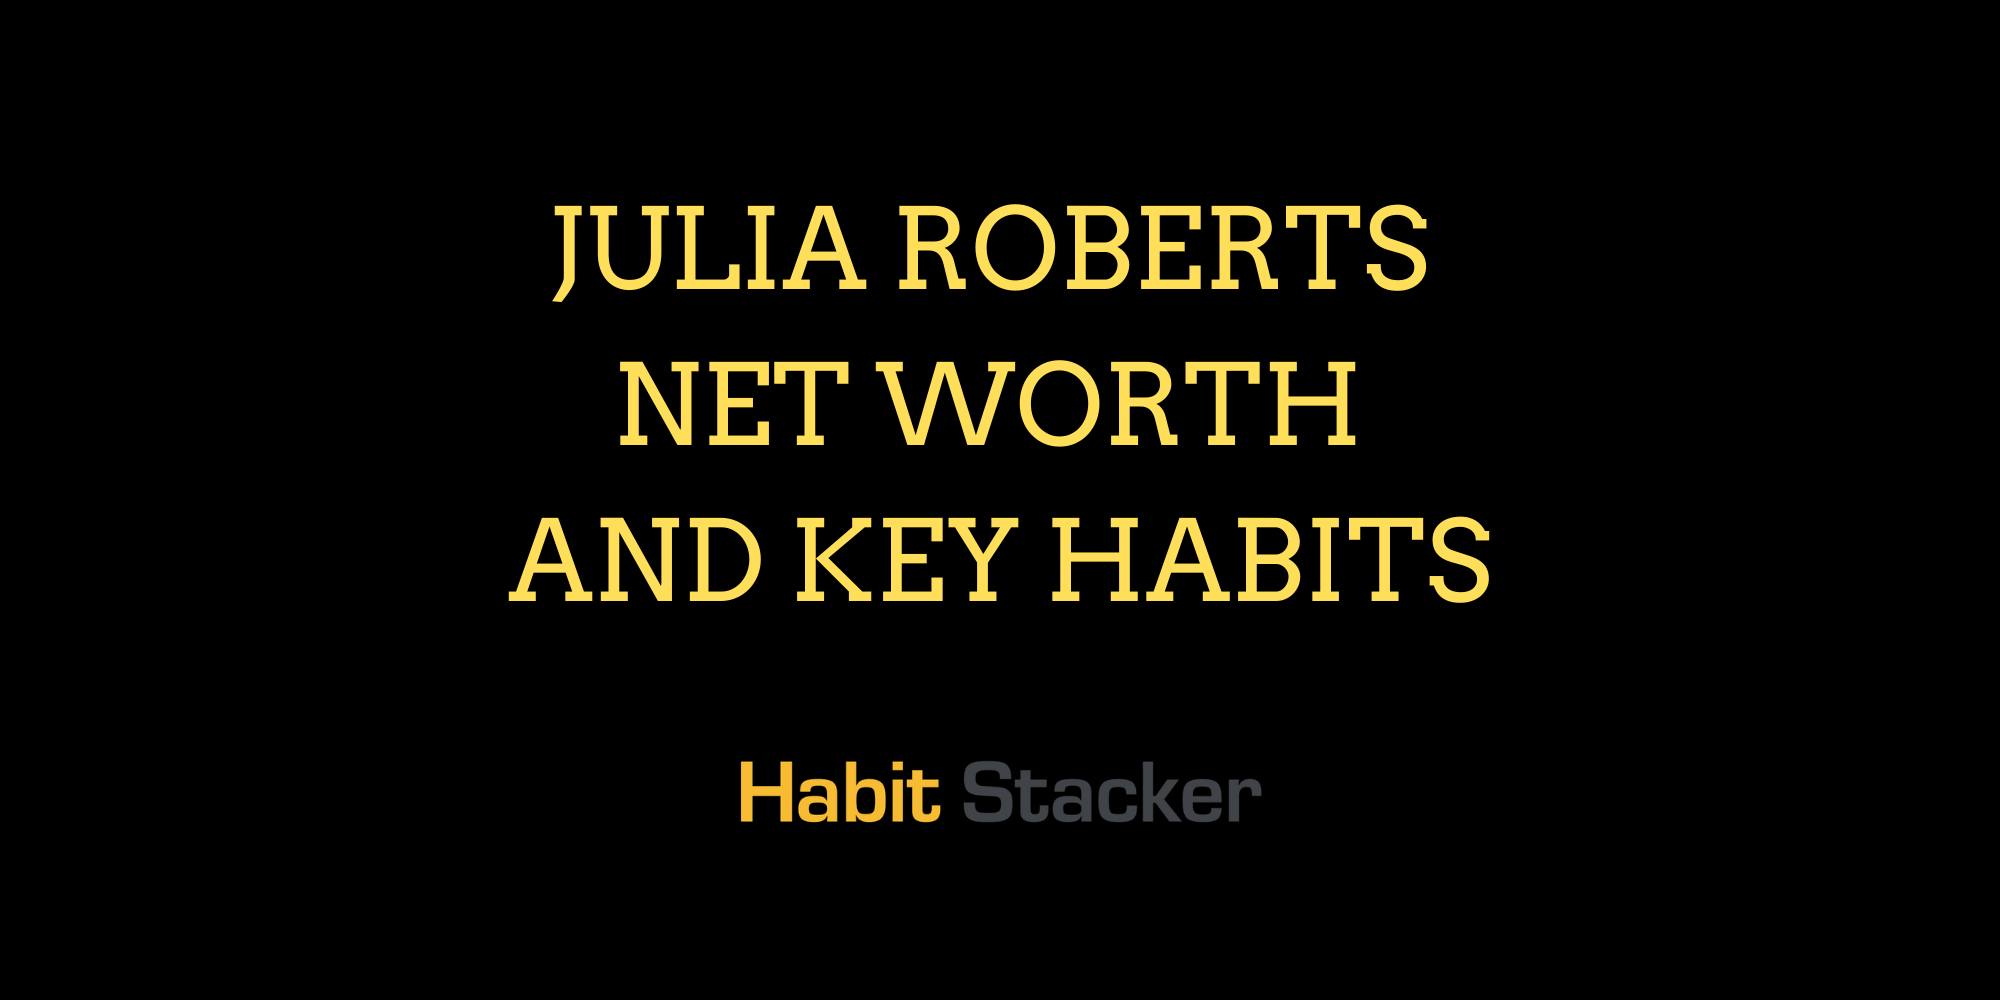 Julia Roberts Net Worth and Key Habits